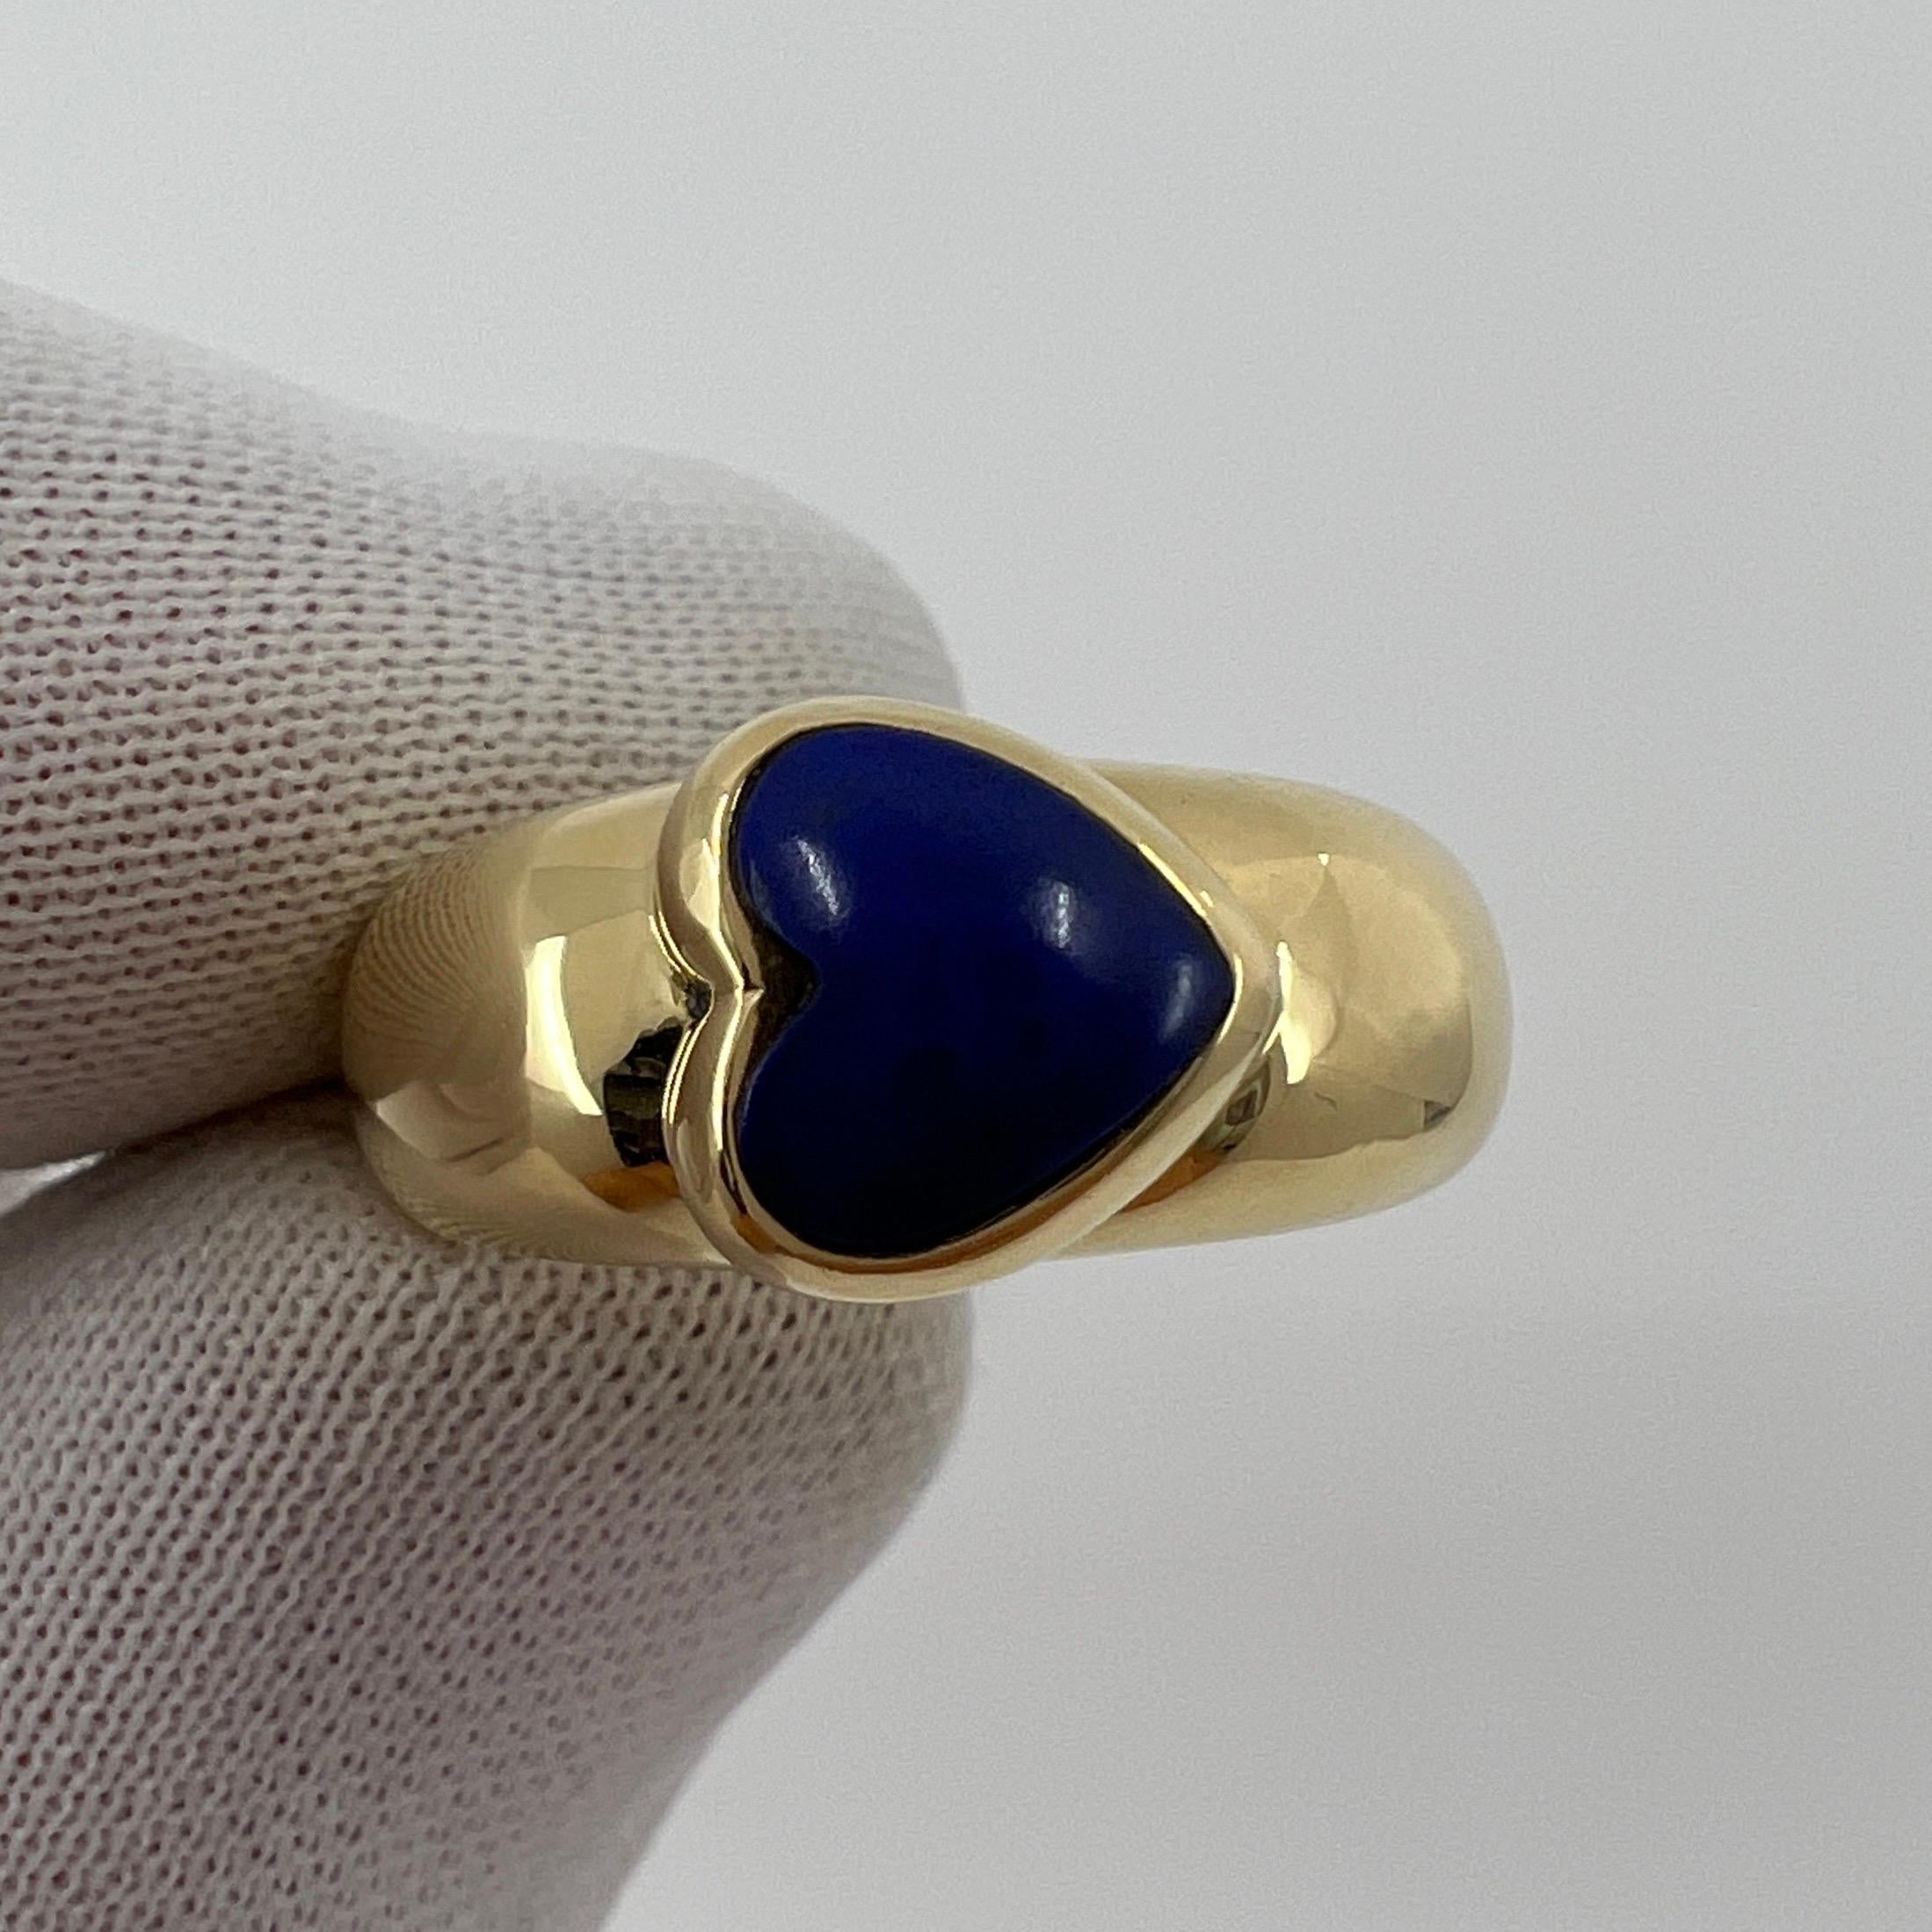 Rare Vintage Van Cleef & Arpels 18k Yellow Gold Lapis Lazuli Heart Ring with Box 1